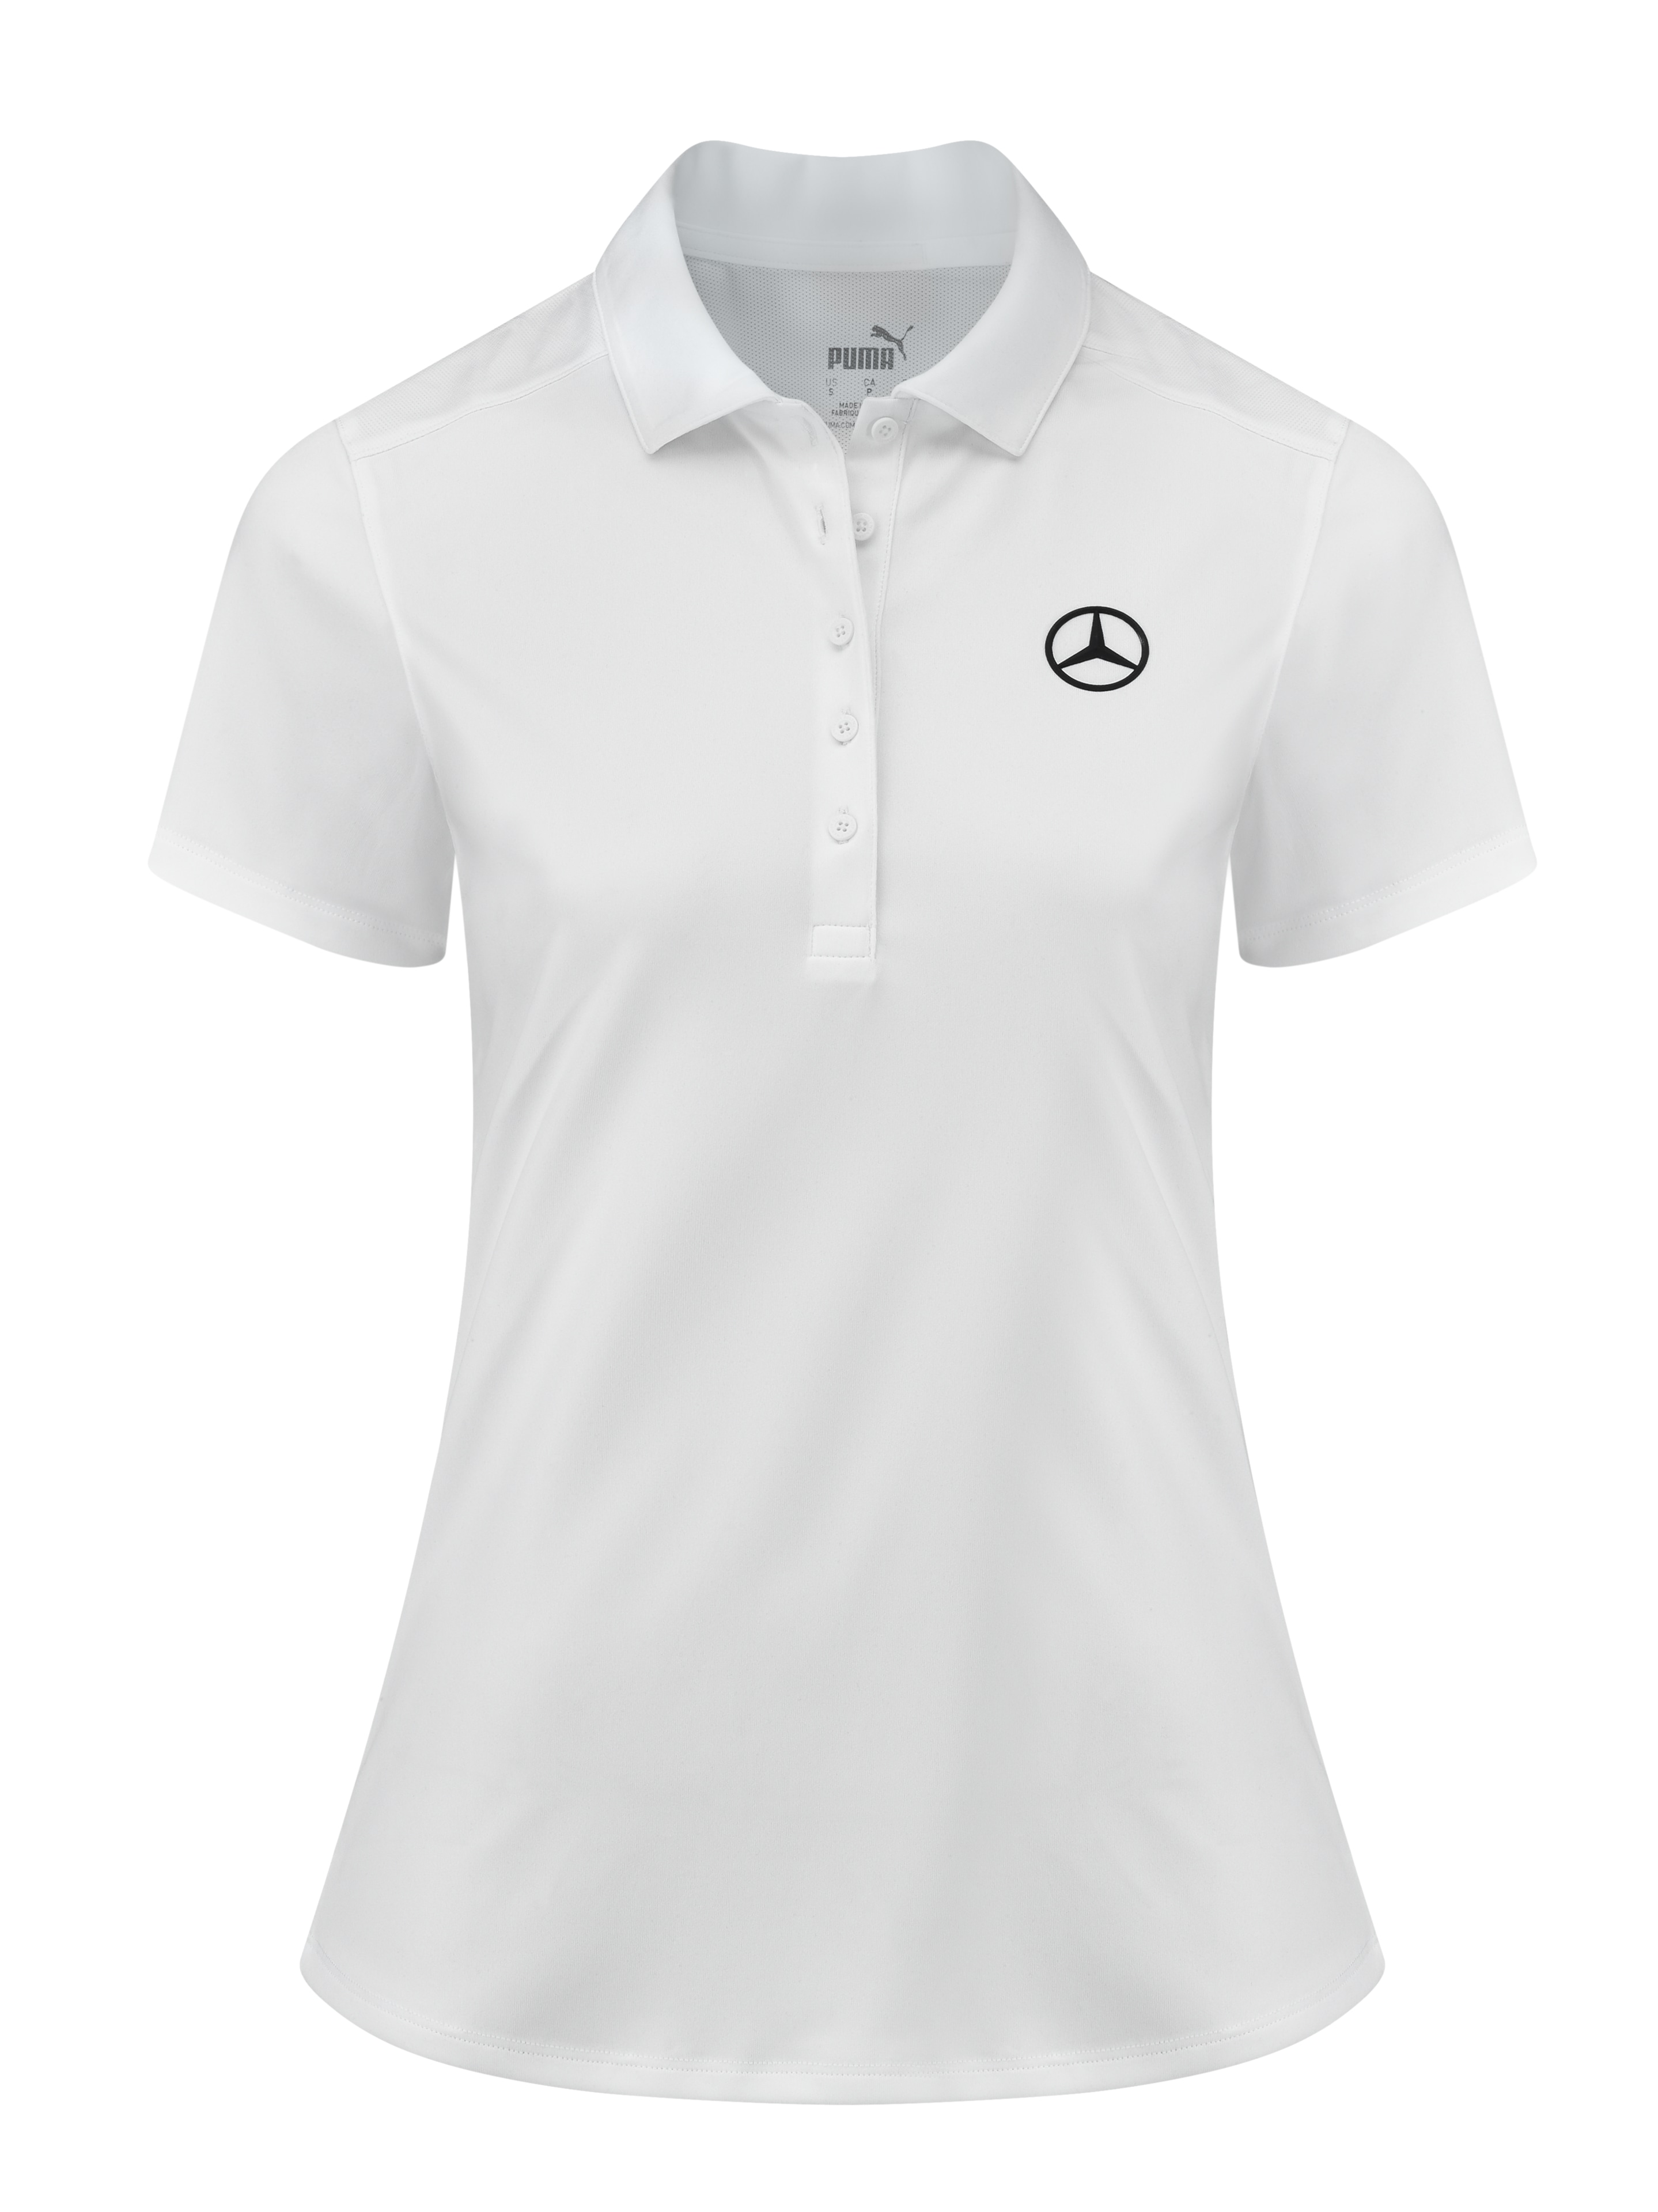 Golf-Poloshirt Damen, Pure - white, XL